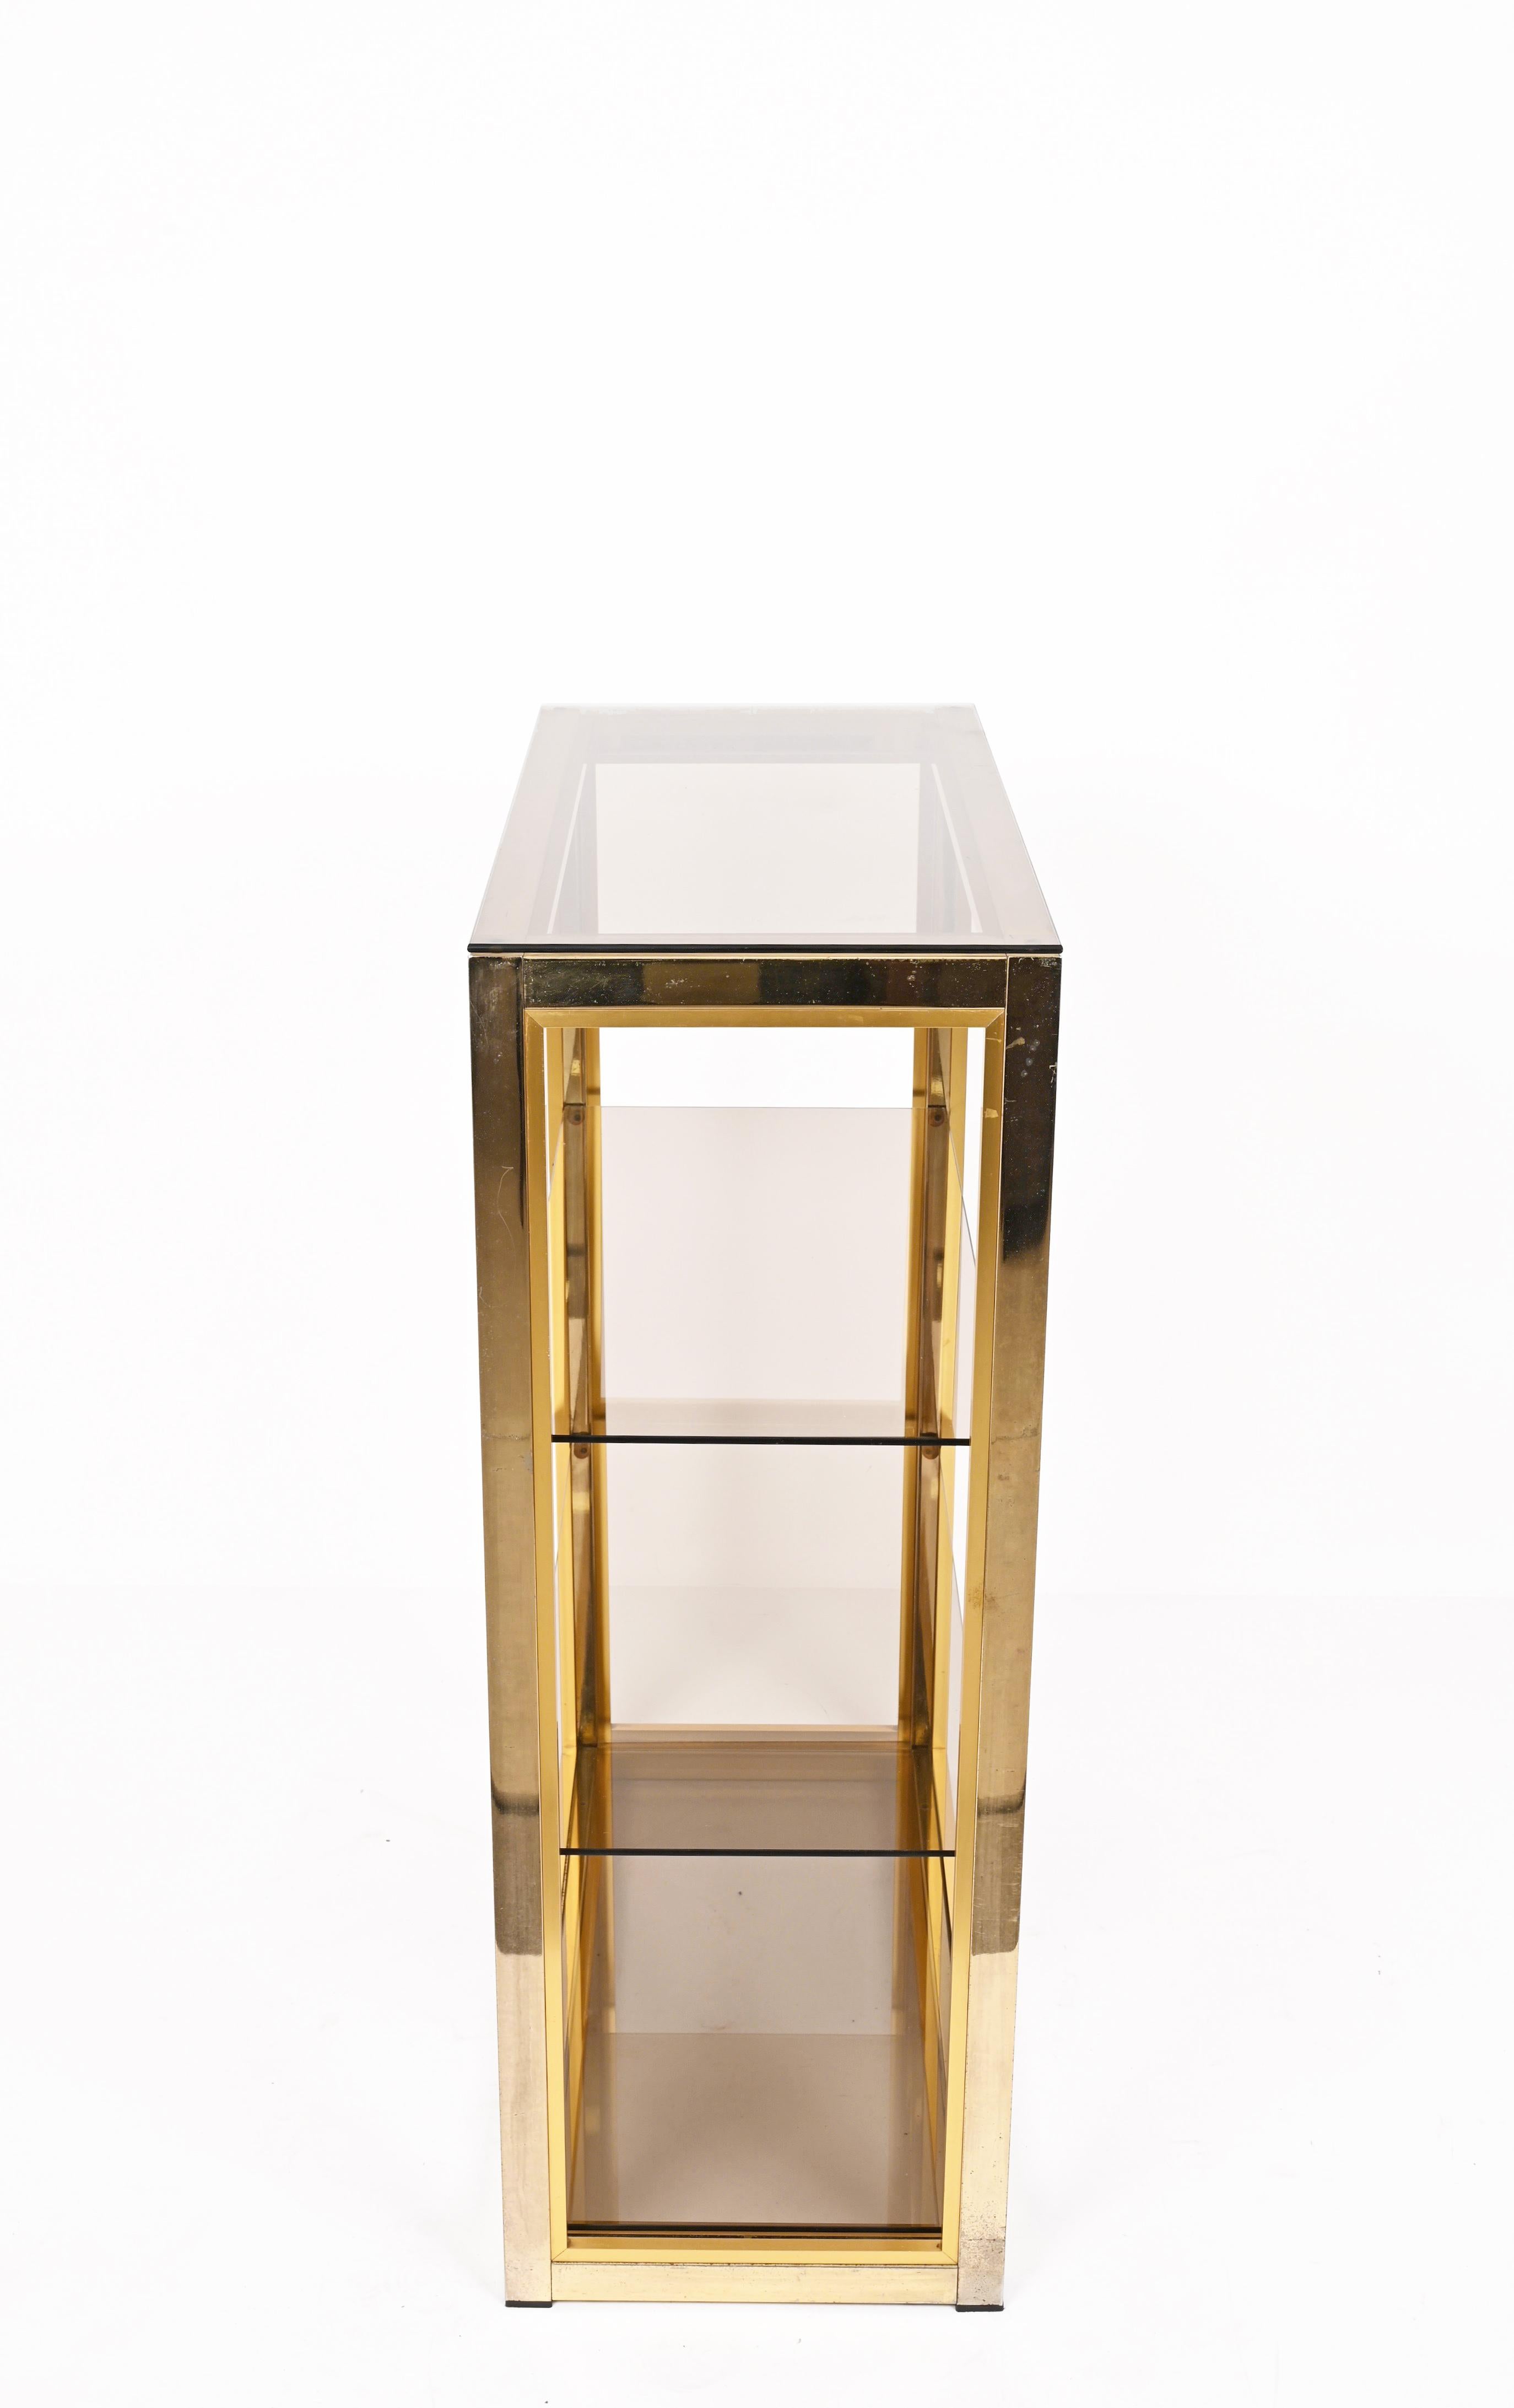 Renato Zevi Gilded Brass Italian Bookcase with Glass Shelves, Romeo Rega 1970s For Sale 11